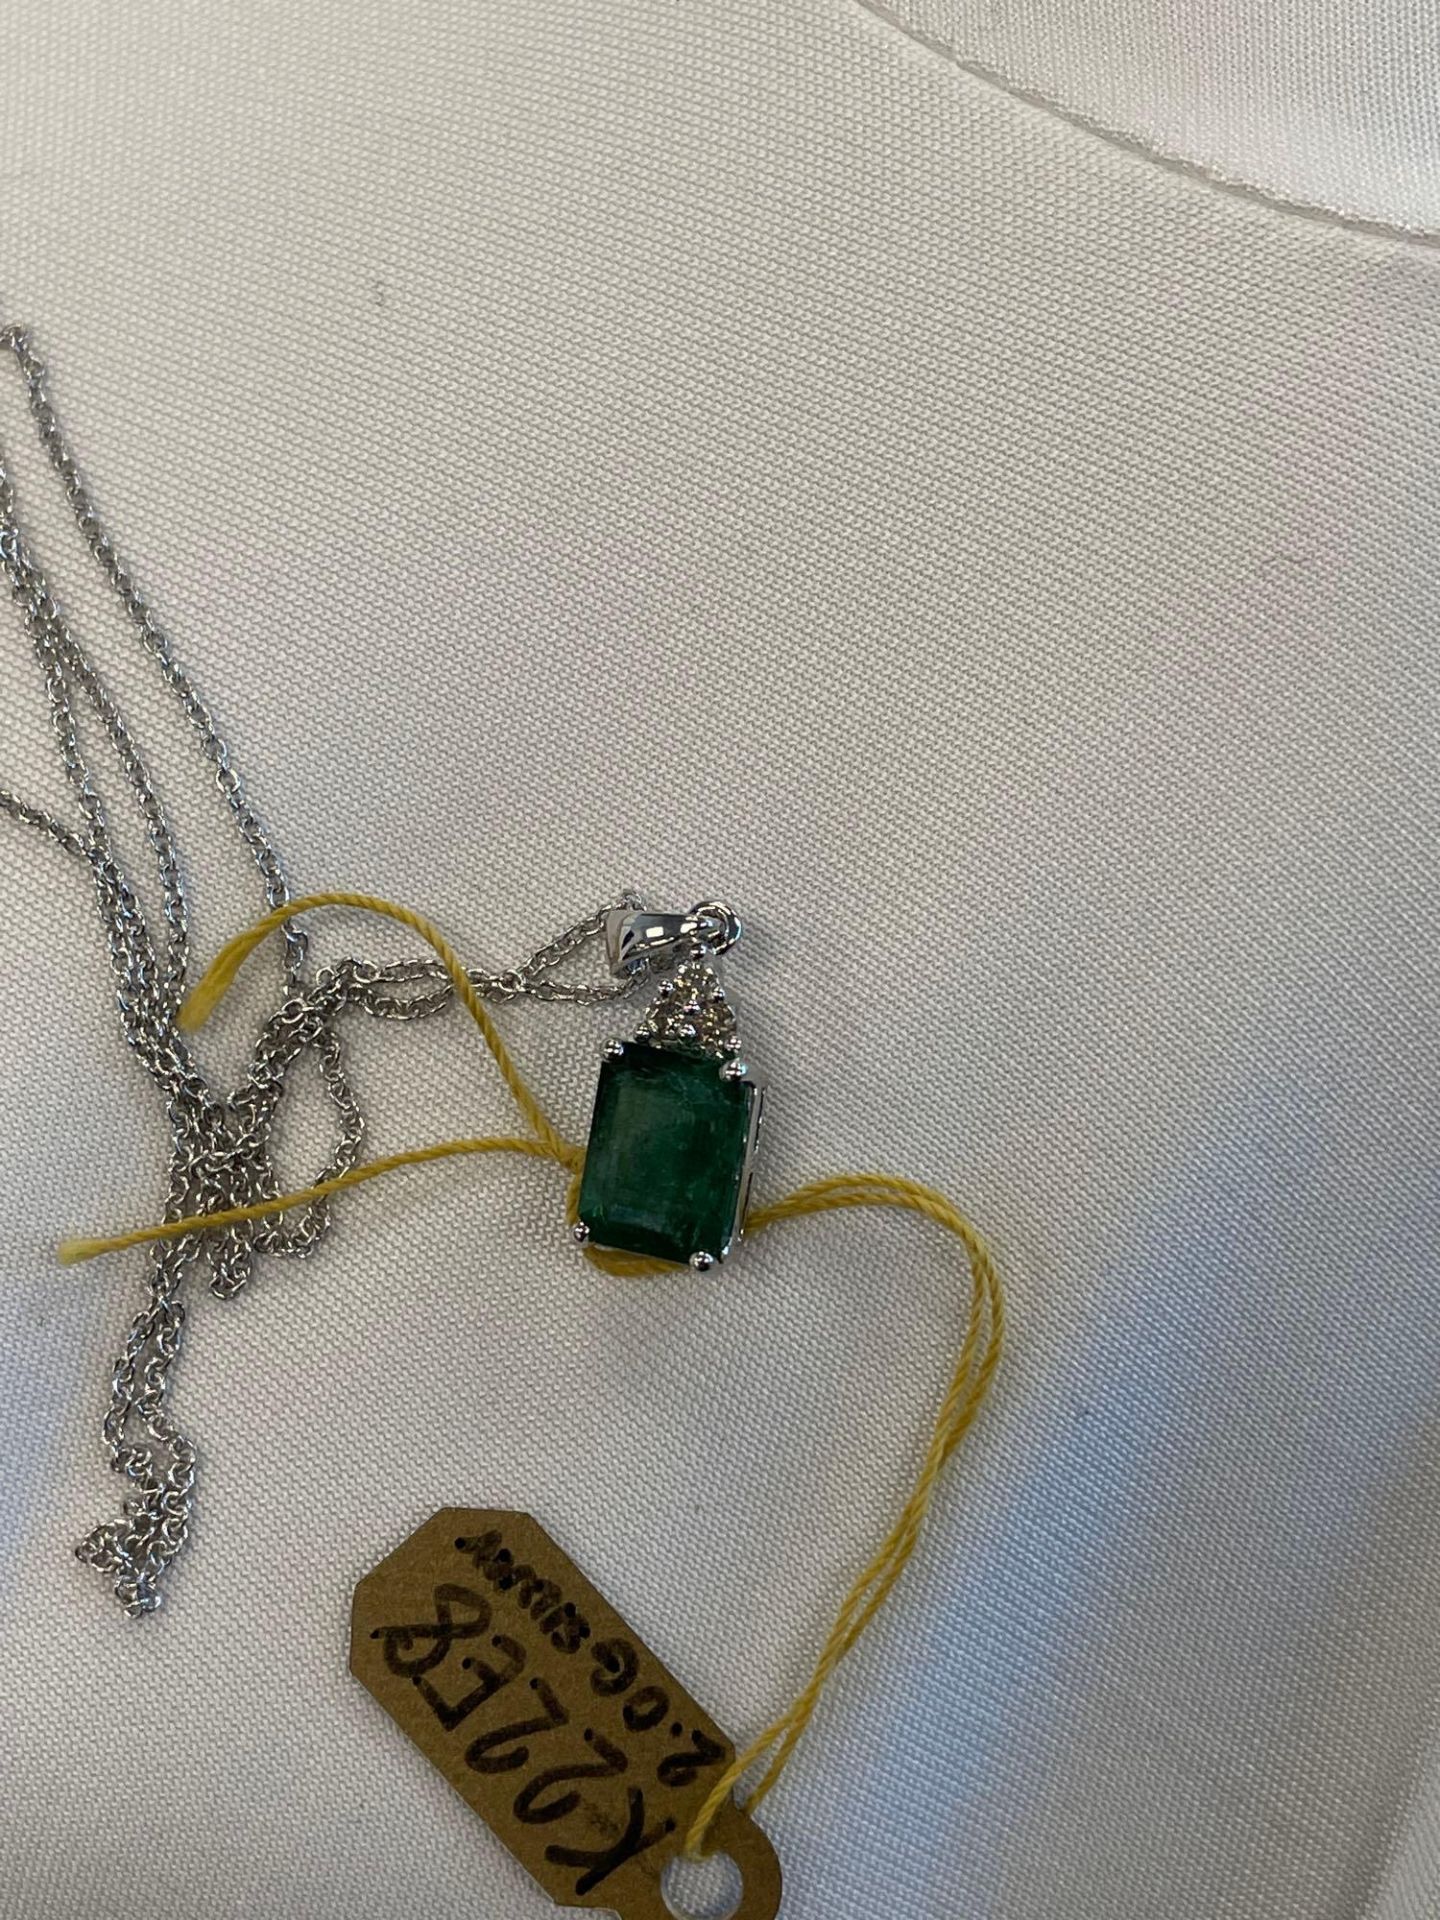 Jewelry; Emerald Beryl 1 ctw earrings & Emerald Beryl 1.63 ctw Necklace - Image 6 of 7